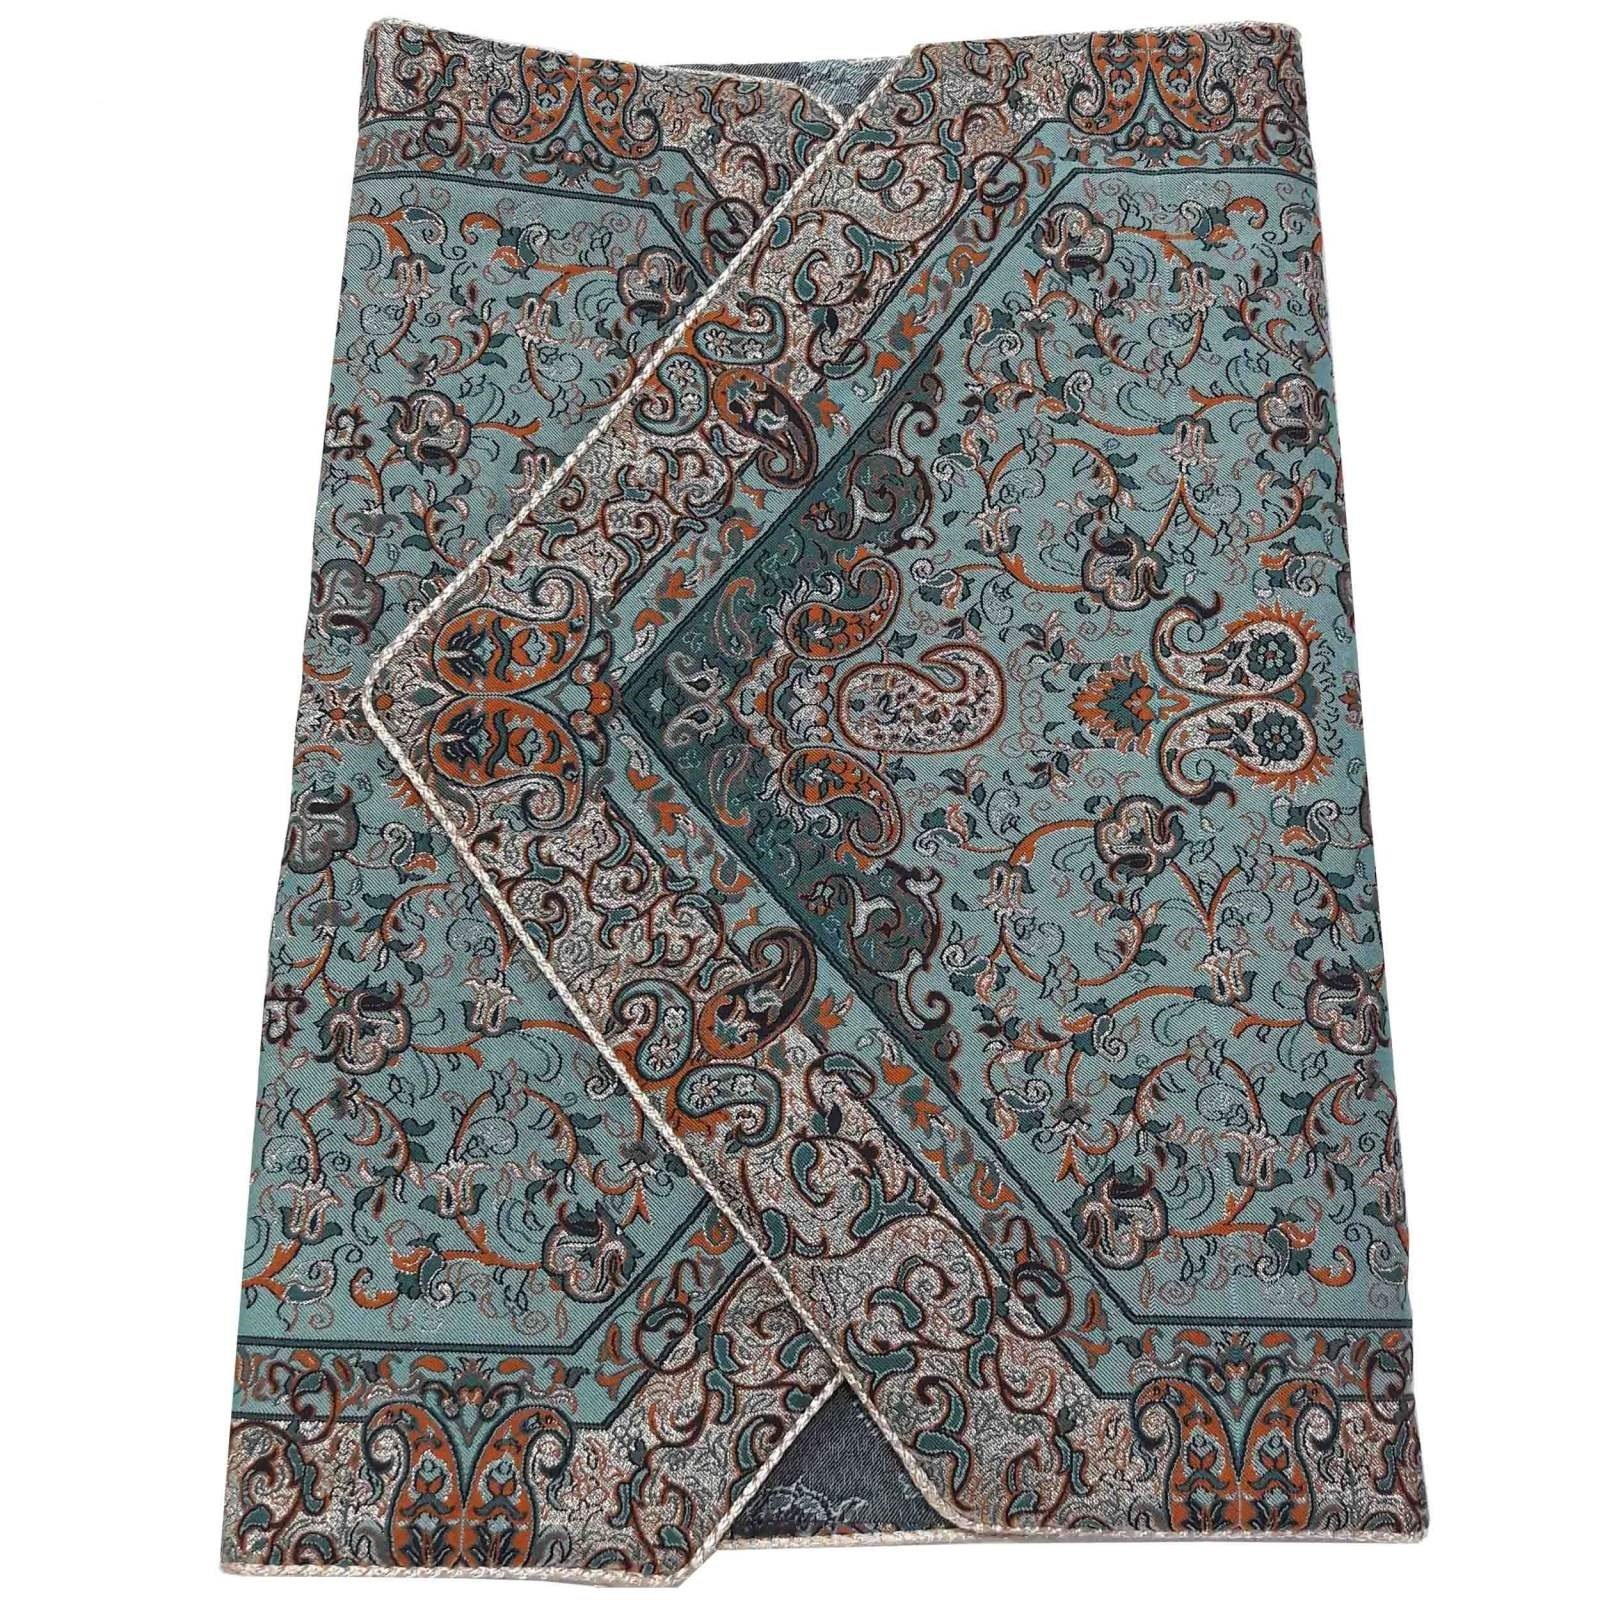 Handwoven Termeh tablecloth Collection 3 pcs model 1117,Handwoven Termeh tablecloth,termeh sellers shop,termeh handwoven